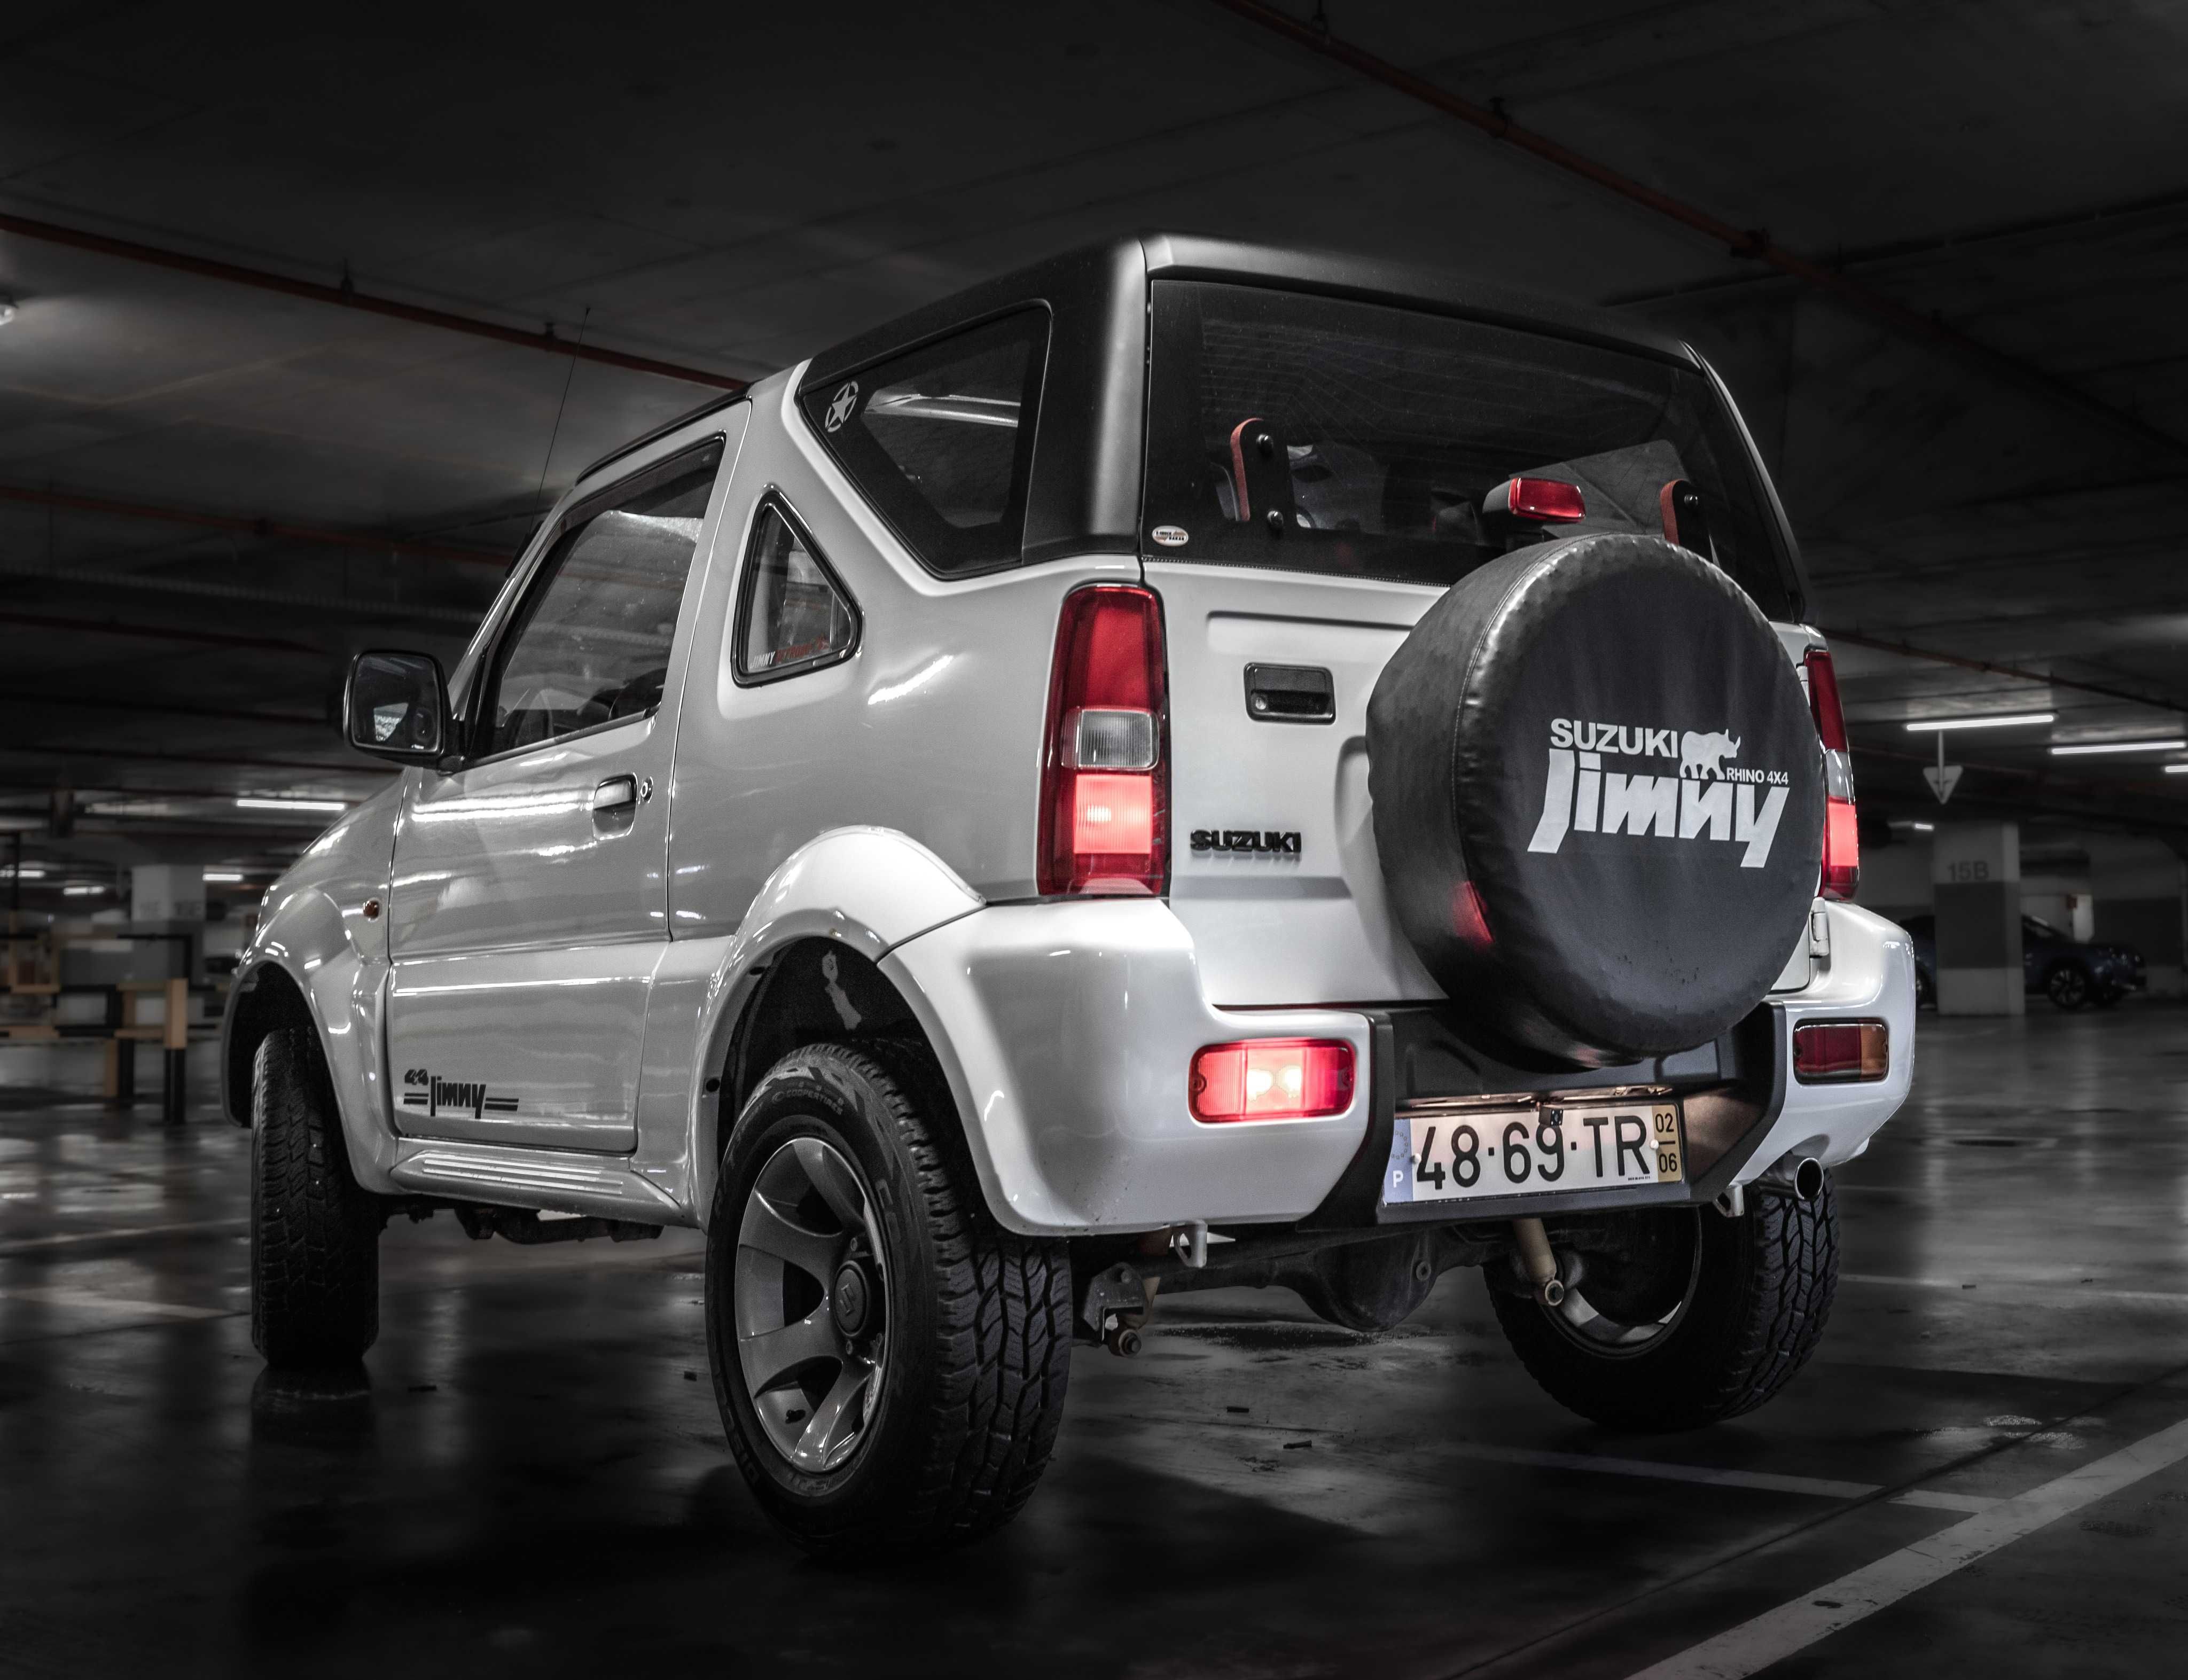 Suzuki Jimny 1.3 cabrio